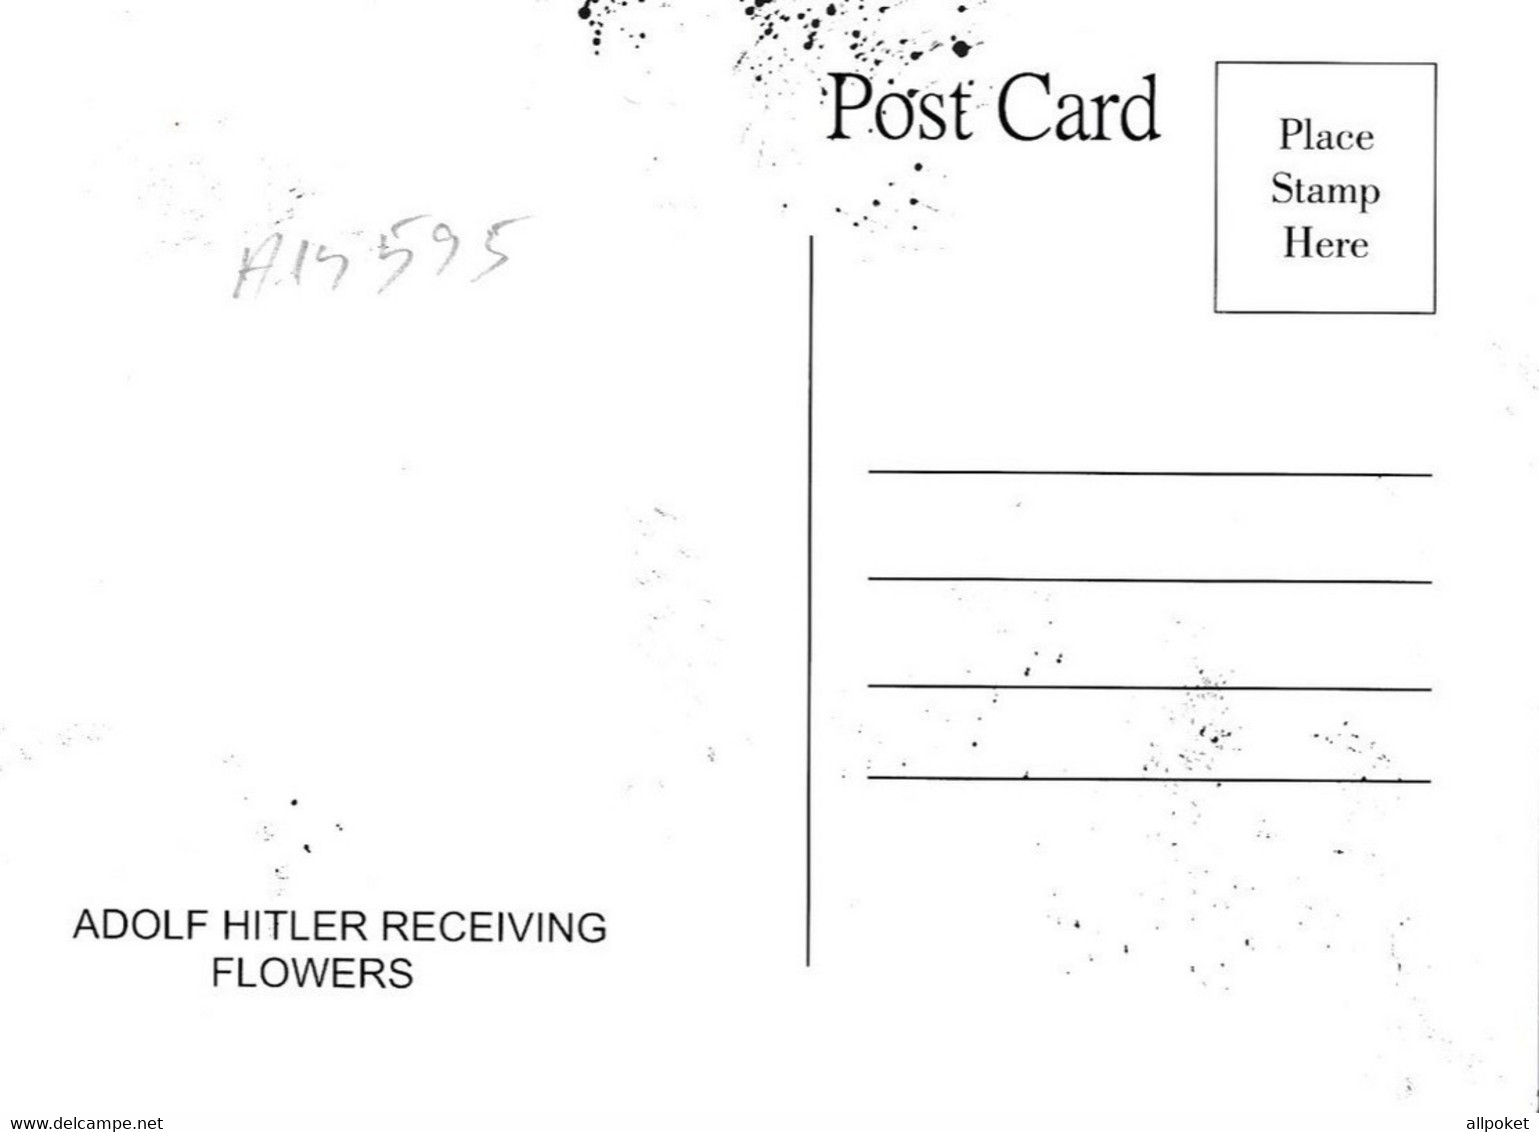 A14595 - DICTATOR GERMANY ADOLF HITLER RECEVING FLOWERS   POSTCARD - People